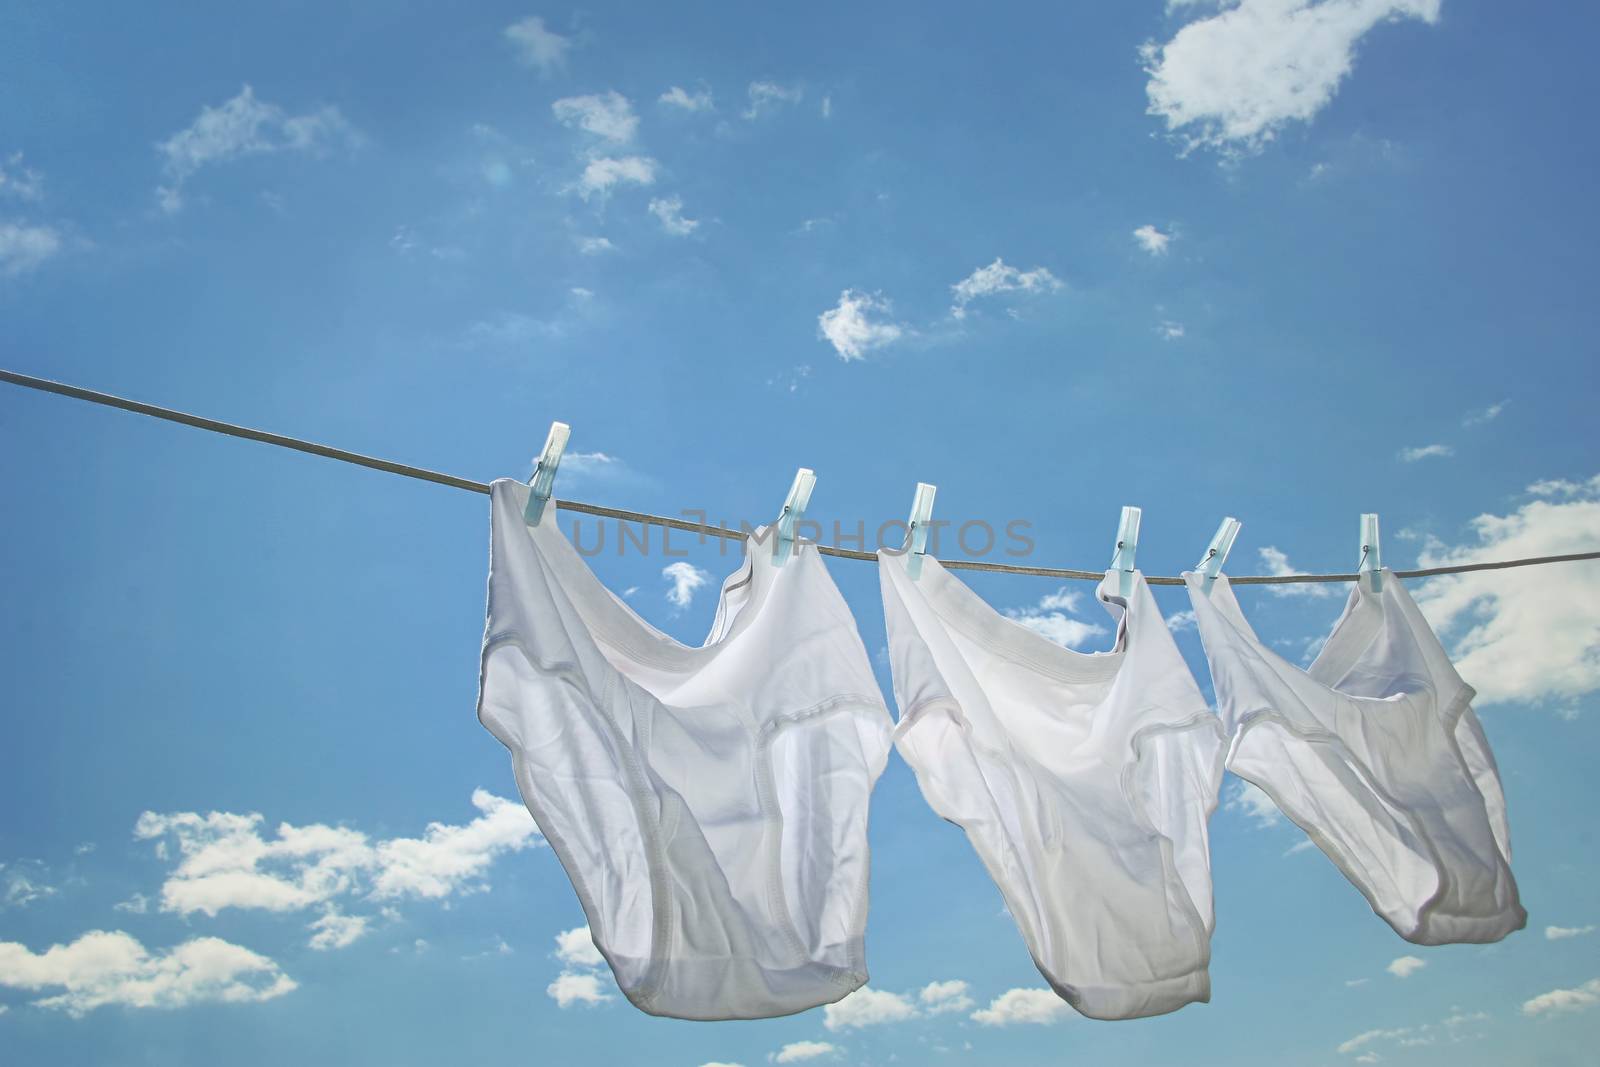 Men's underwear hanging on clothesline by Sandralise